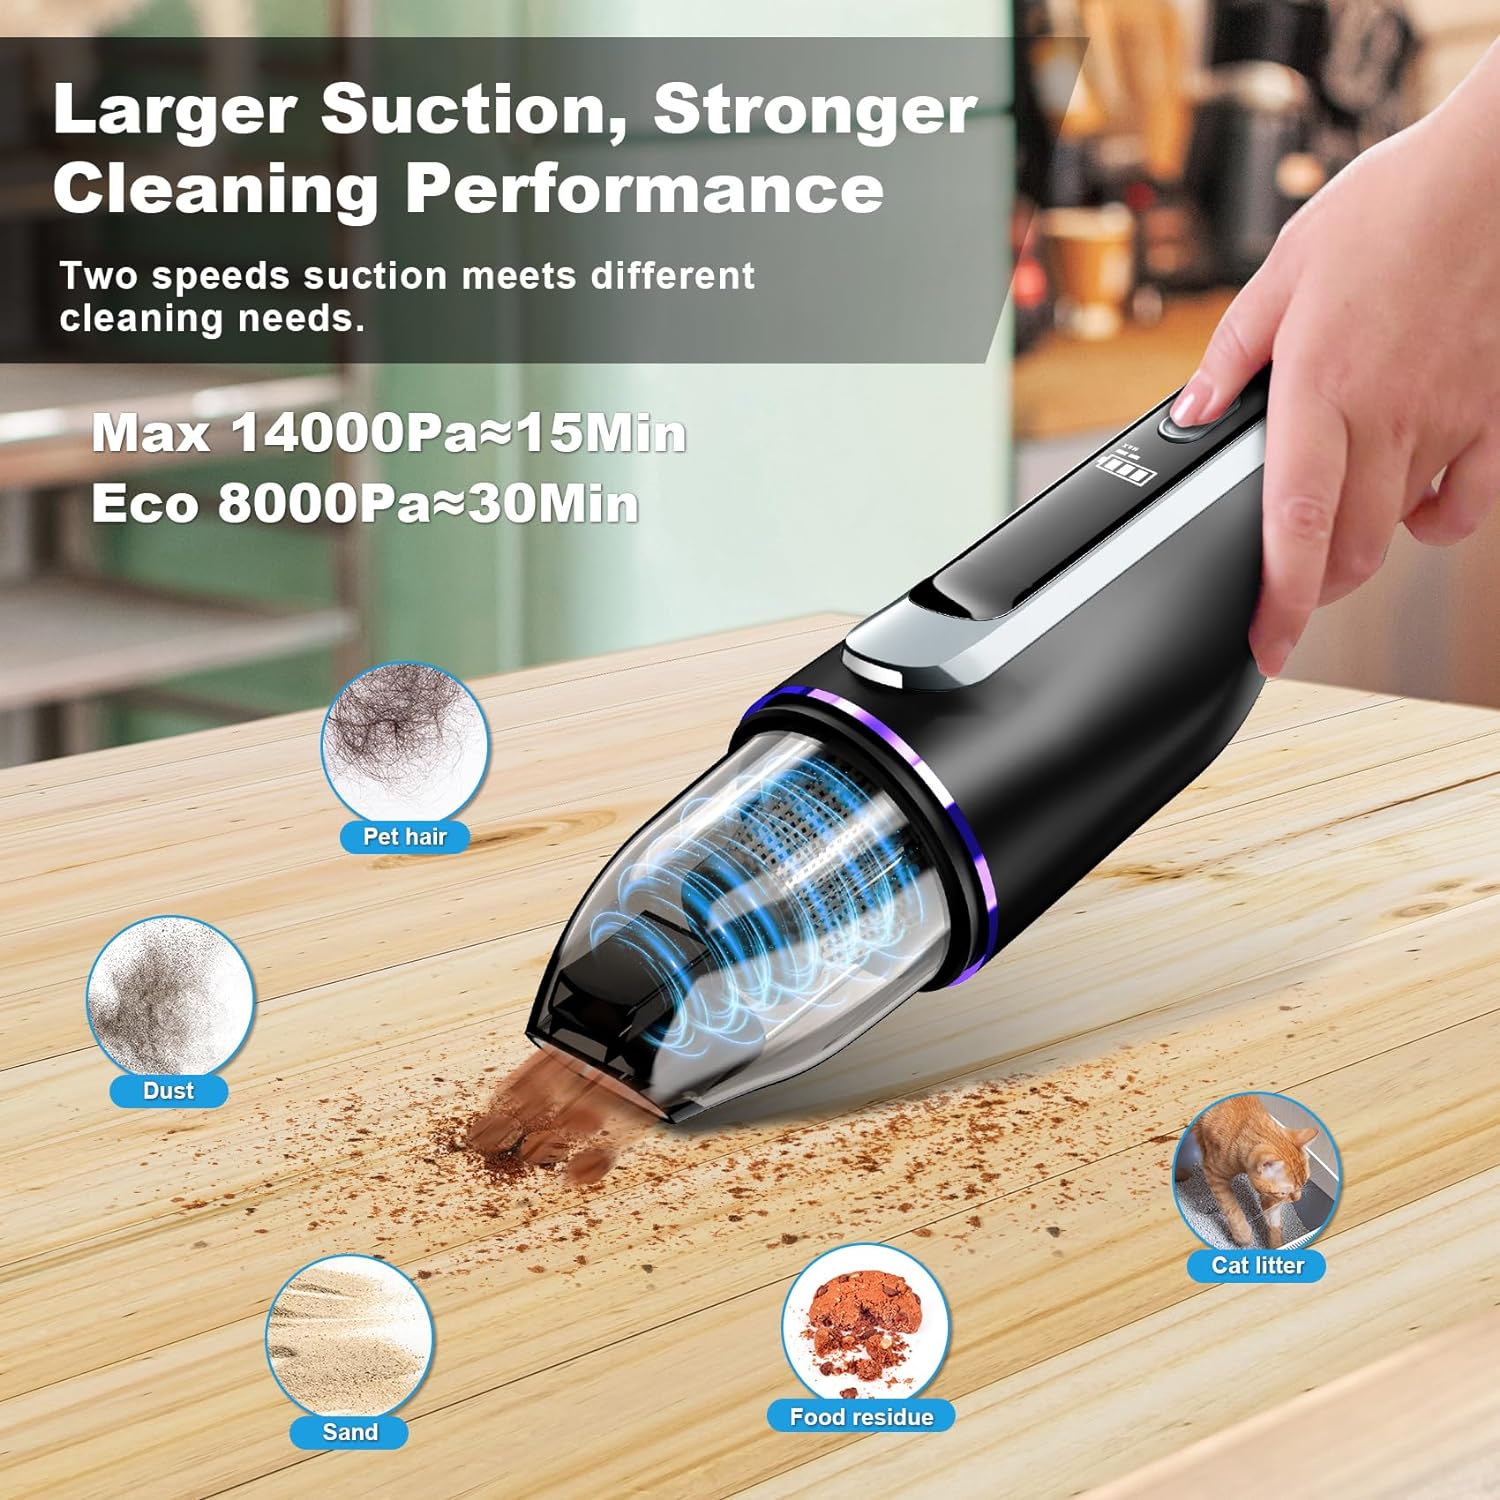 Handheld Vacuum Cordless 14000PA Powerful Suction, Car Vacuum Cleaner with Brushless Motor Cykapu